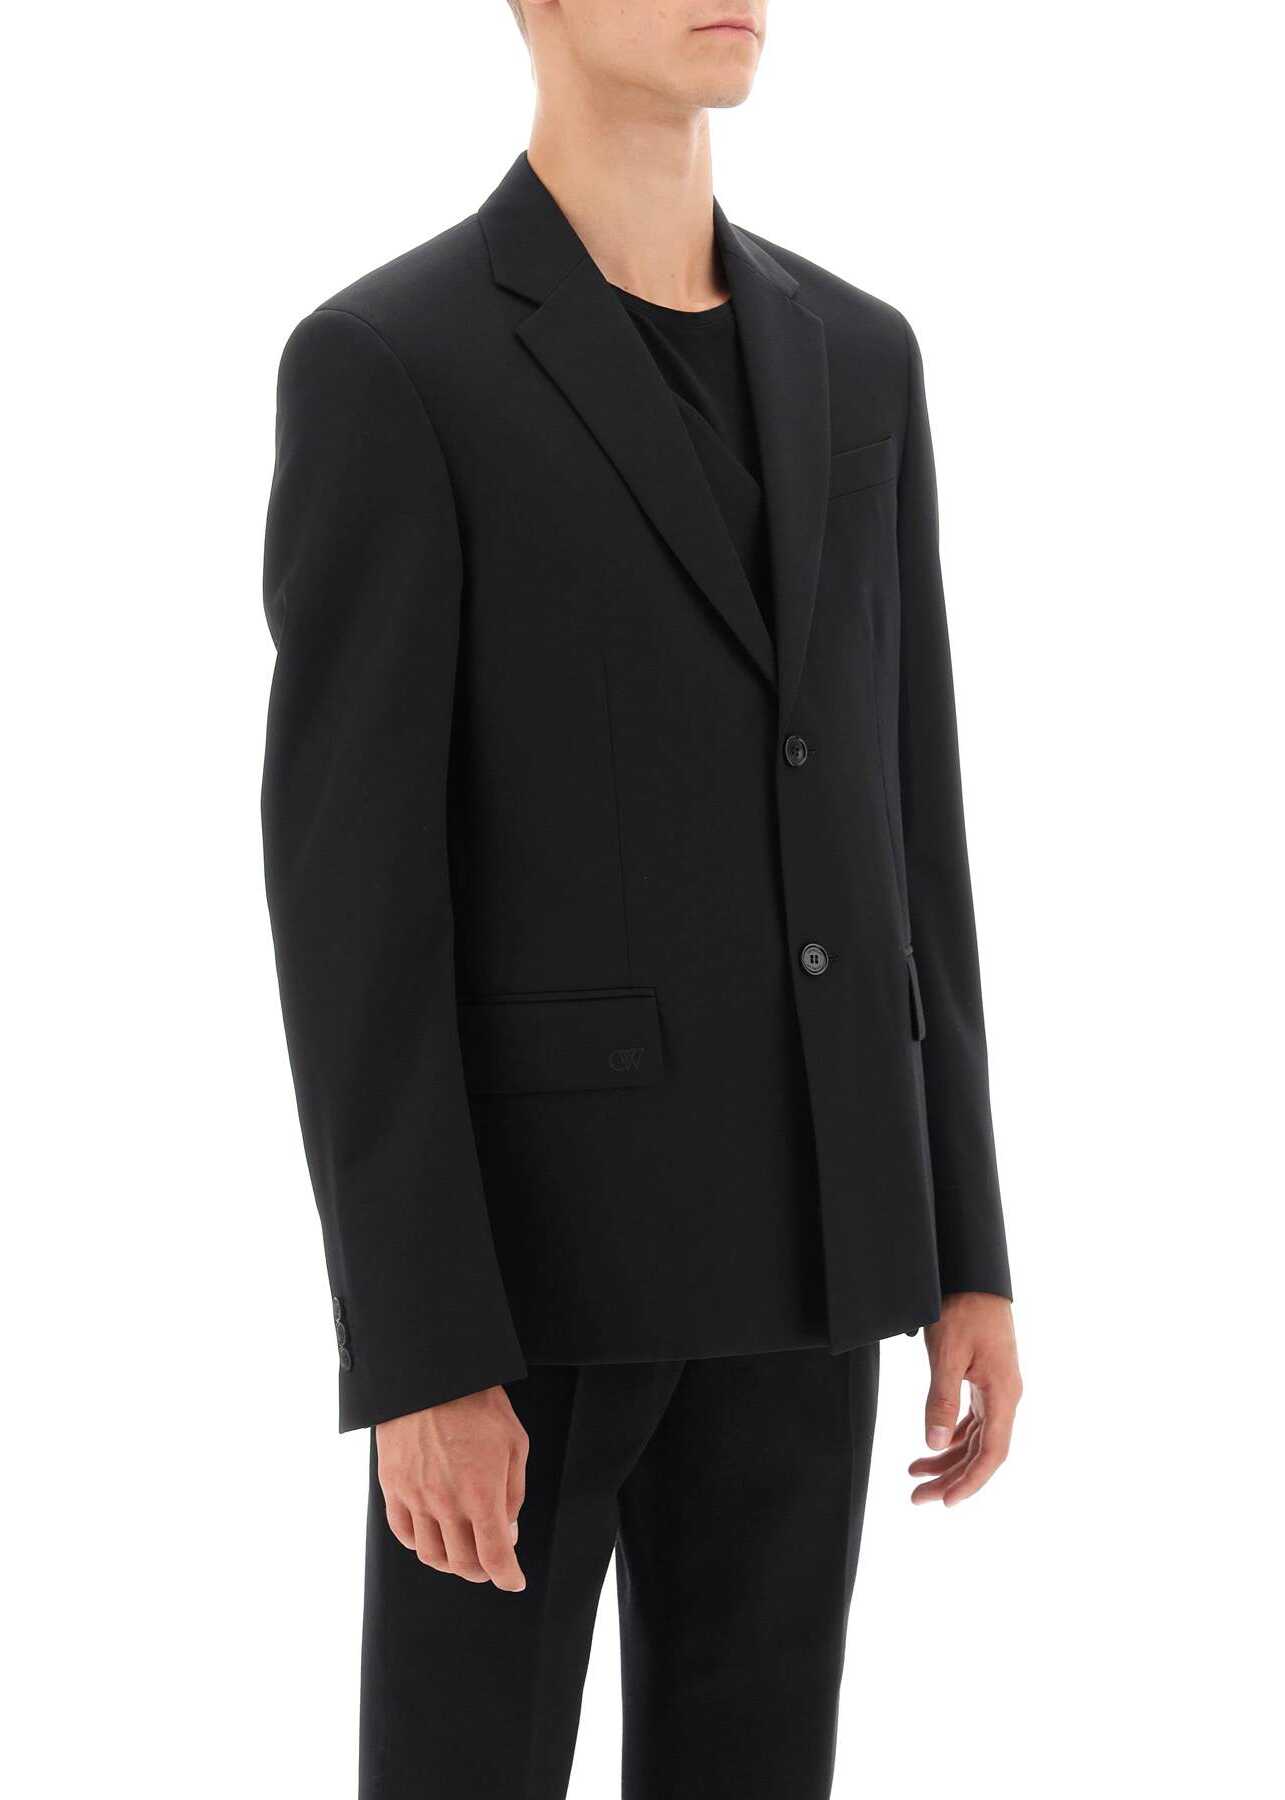 Off-White Light-Wool Single-Breasted Jacket BLACK BLACK b-mall.ro